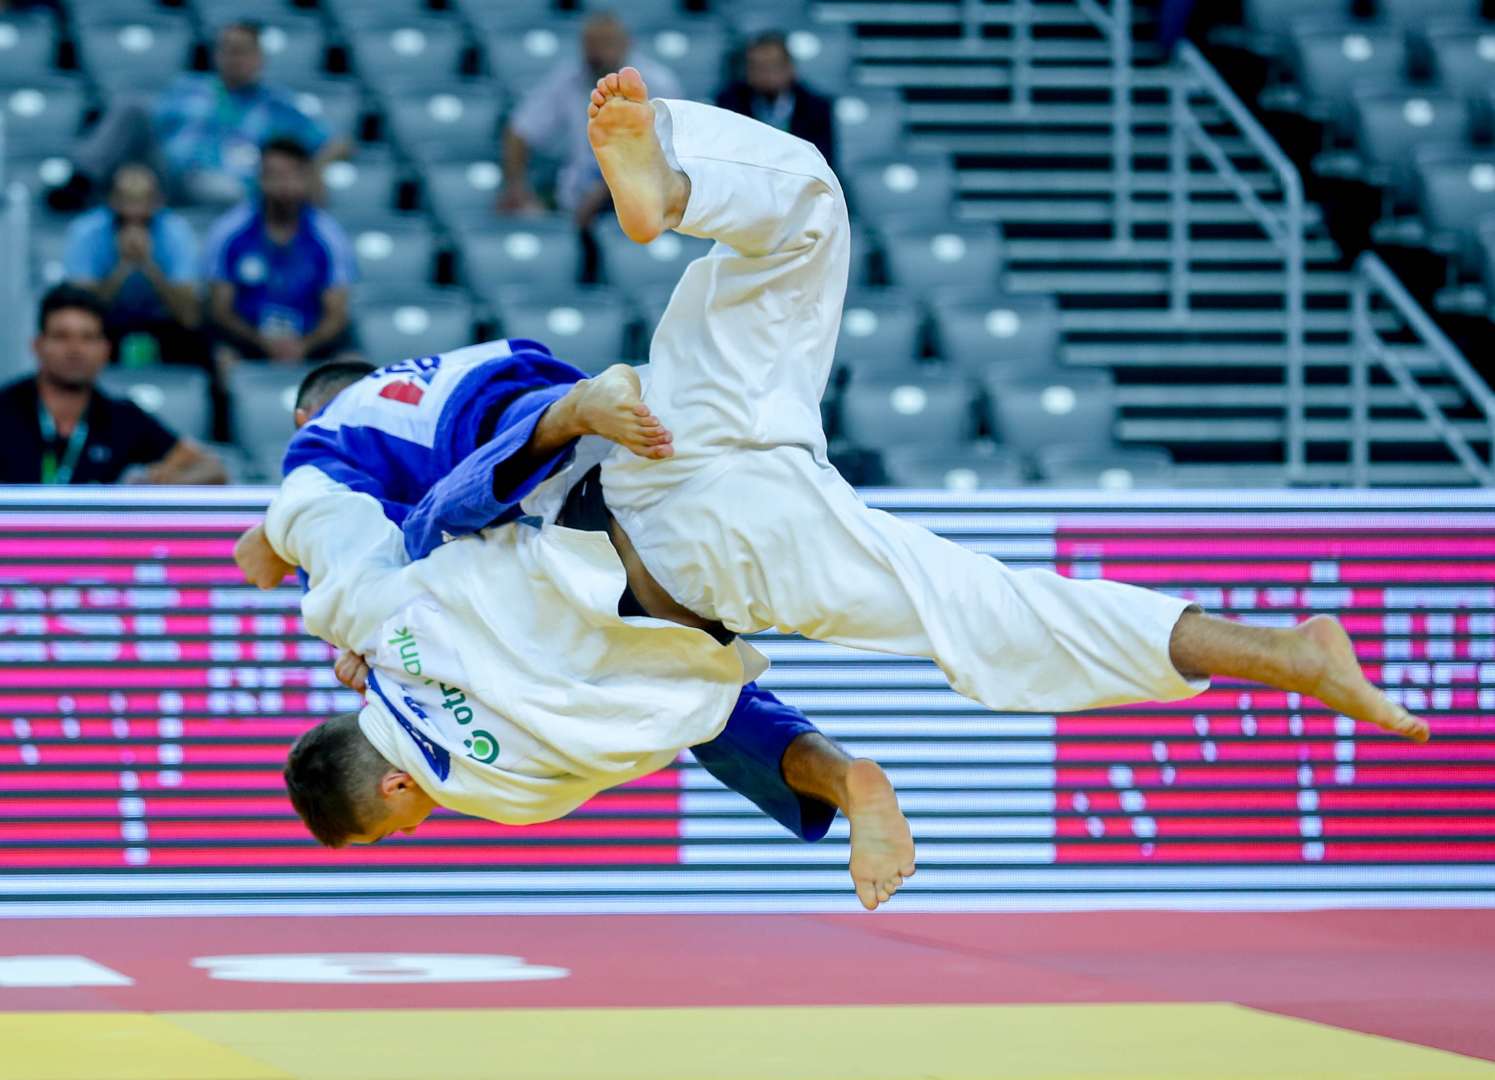 What makes judo fascinating - KL Judo